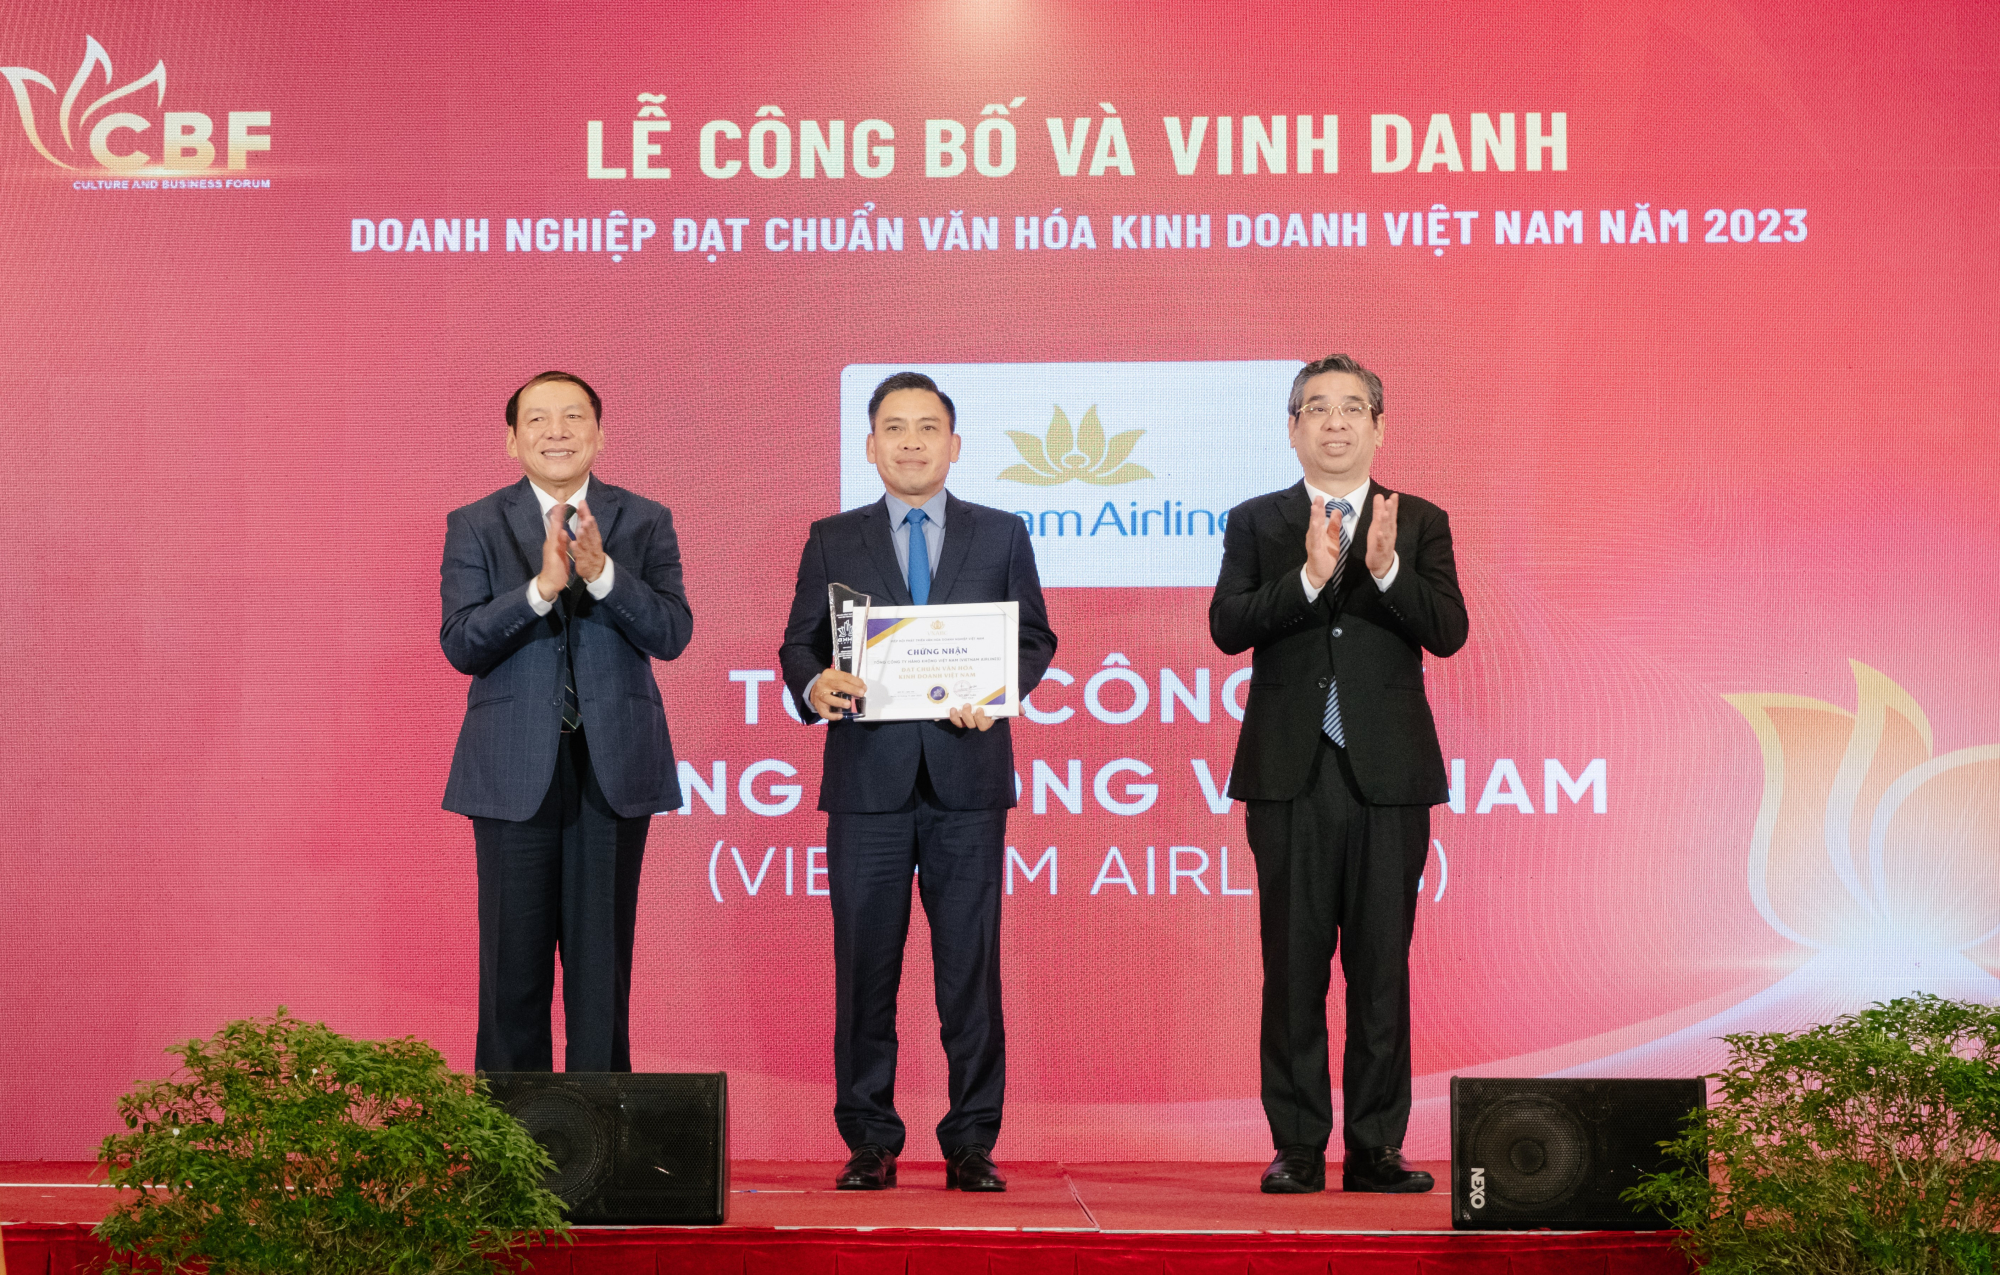 vietnam airlines duoc vinh danh doanh nghiep dat chuan van hoa kinh doanh viet nam nam 2023 hinh 1